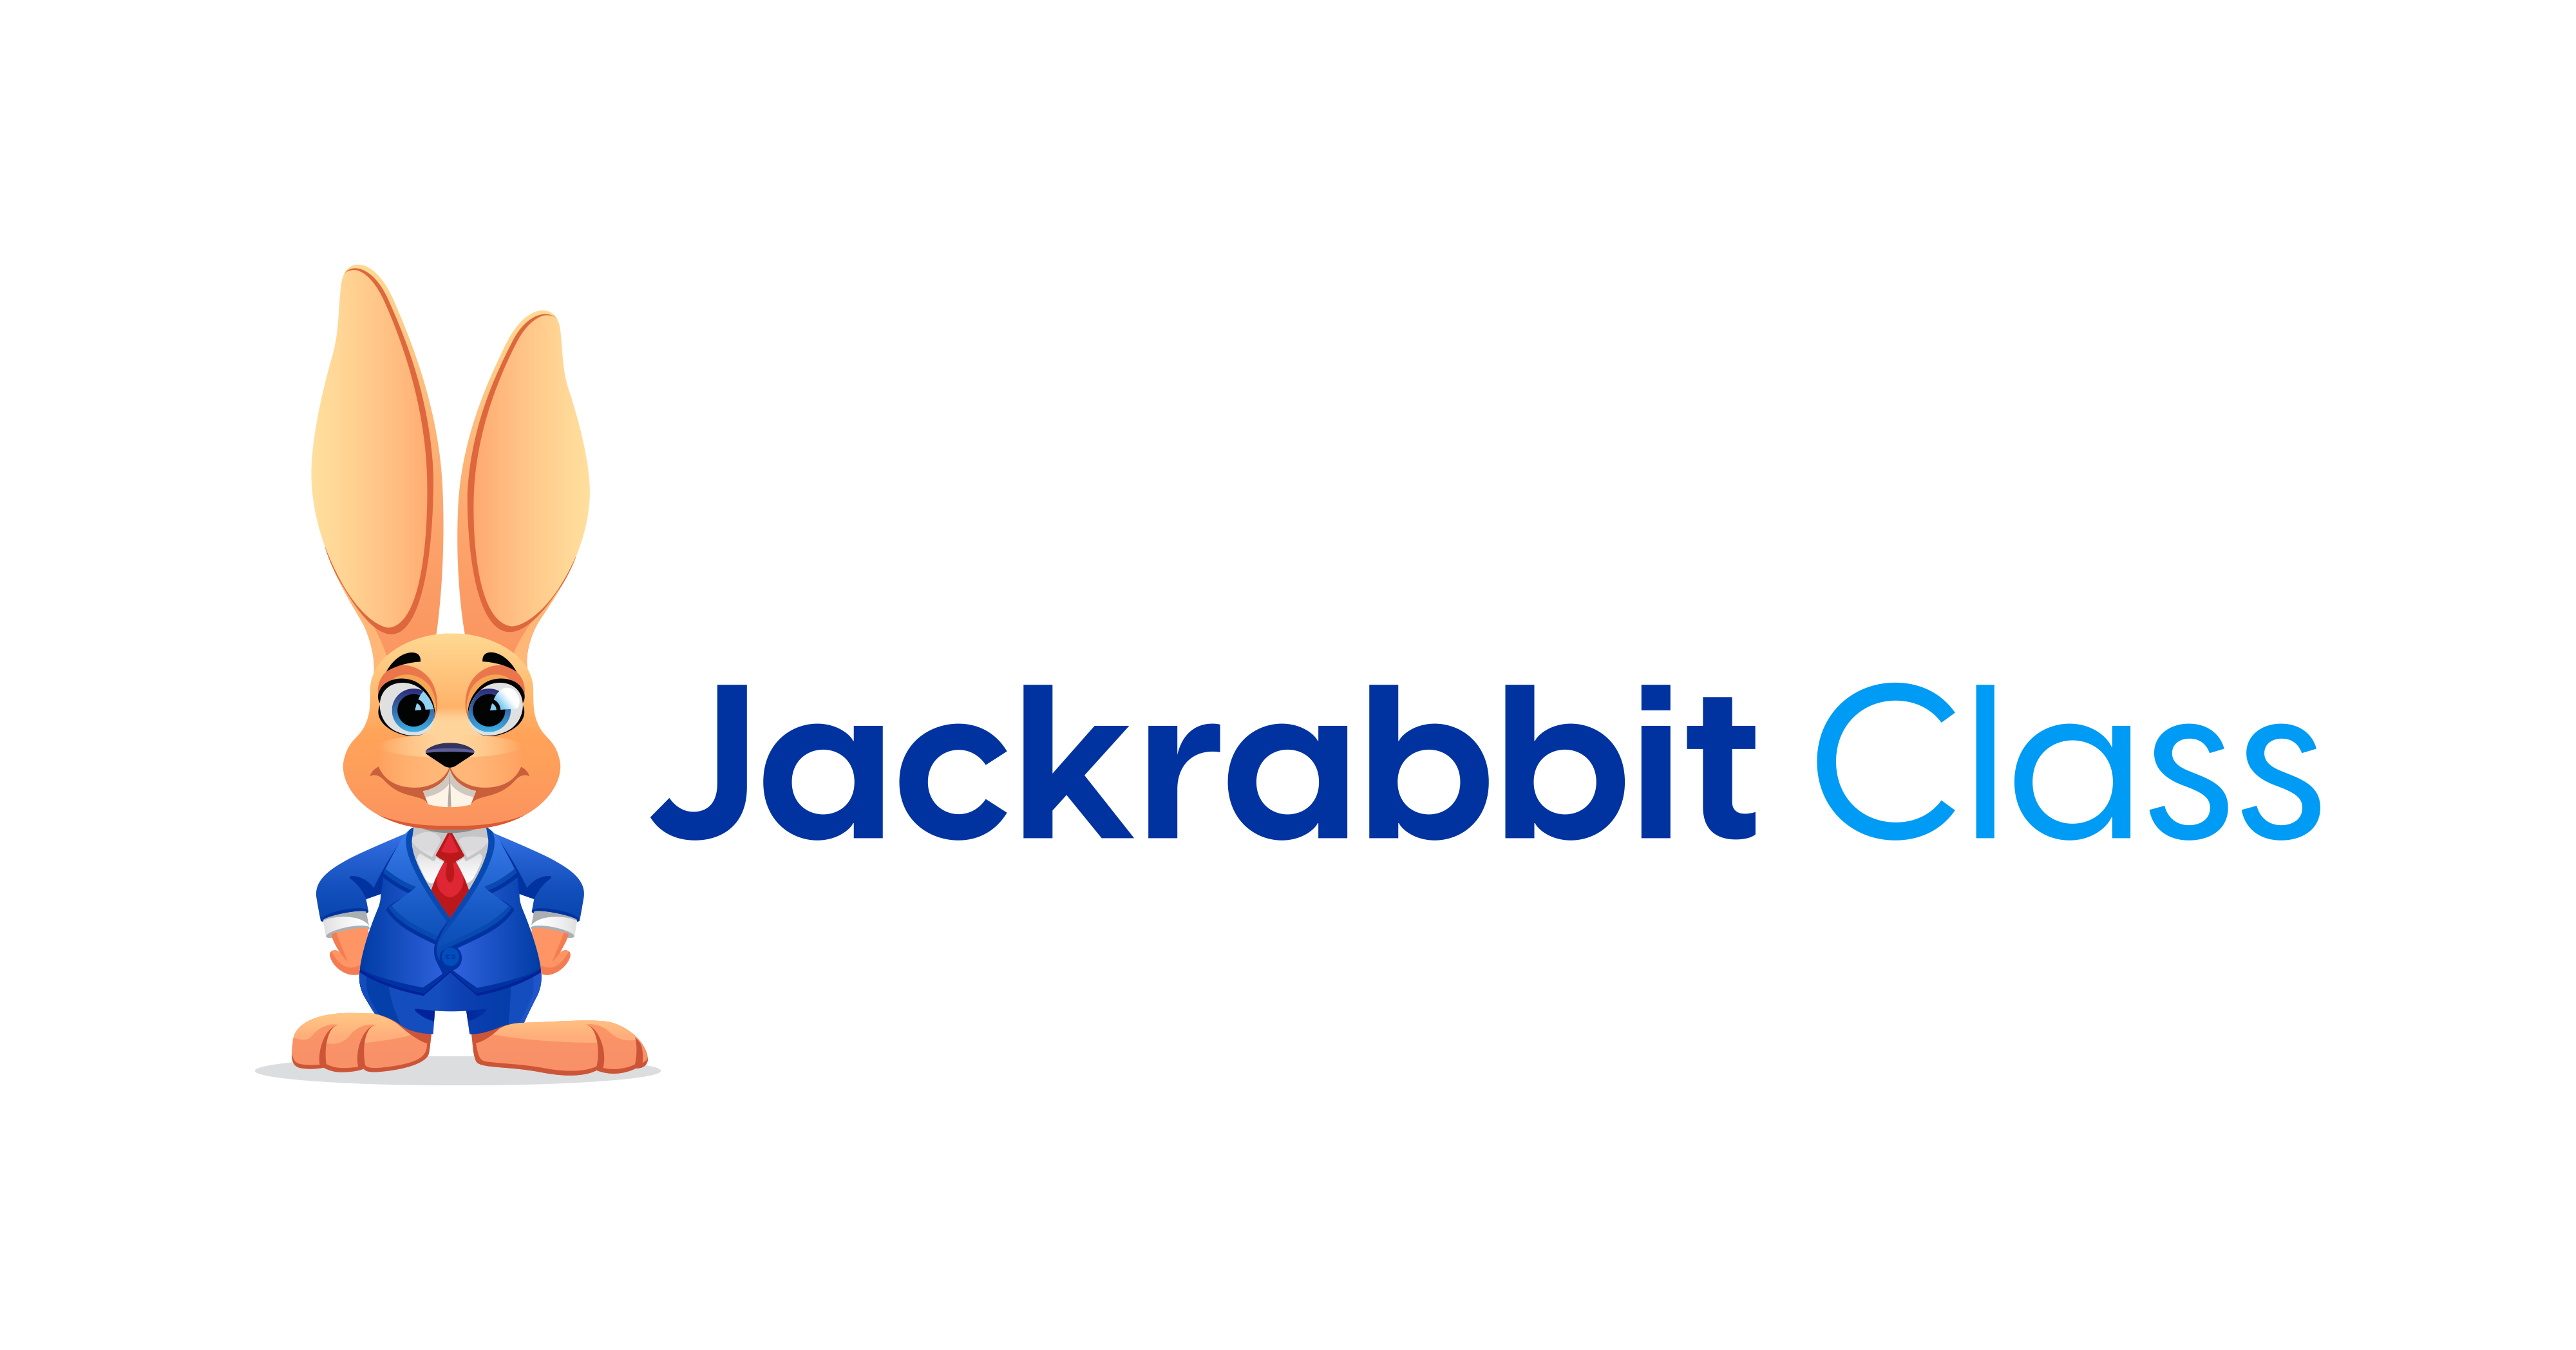 Jackrabbit Class wordmark + bunny